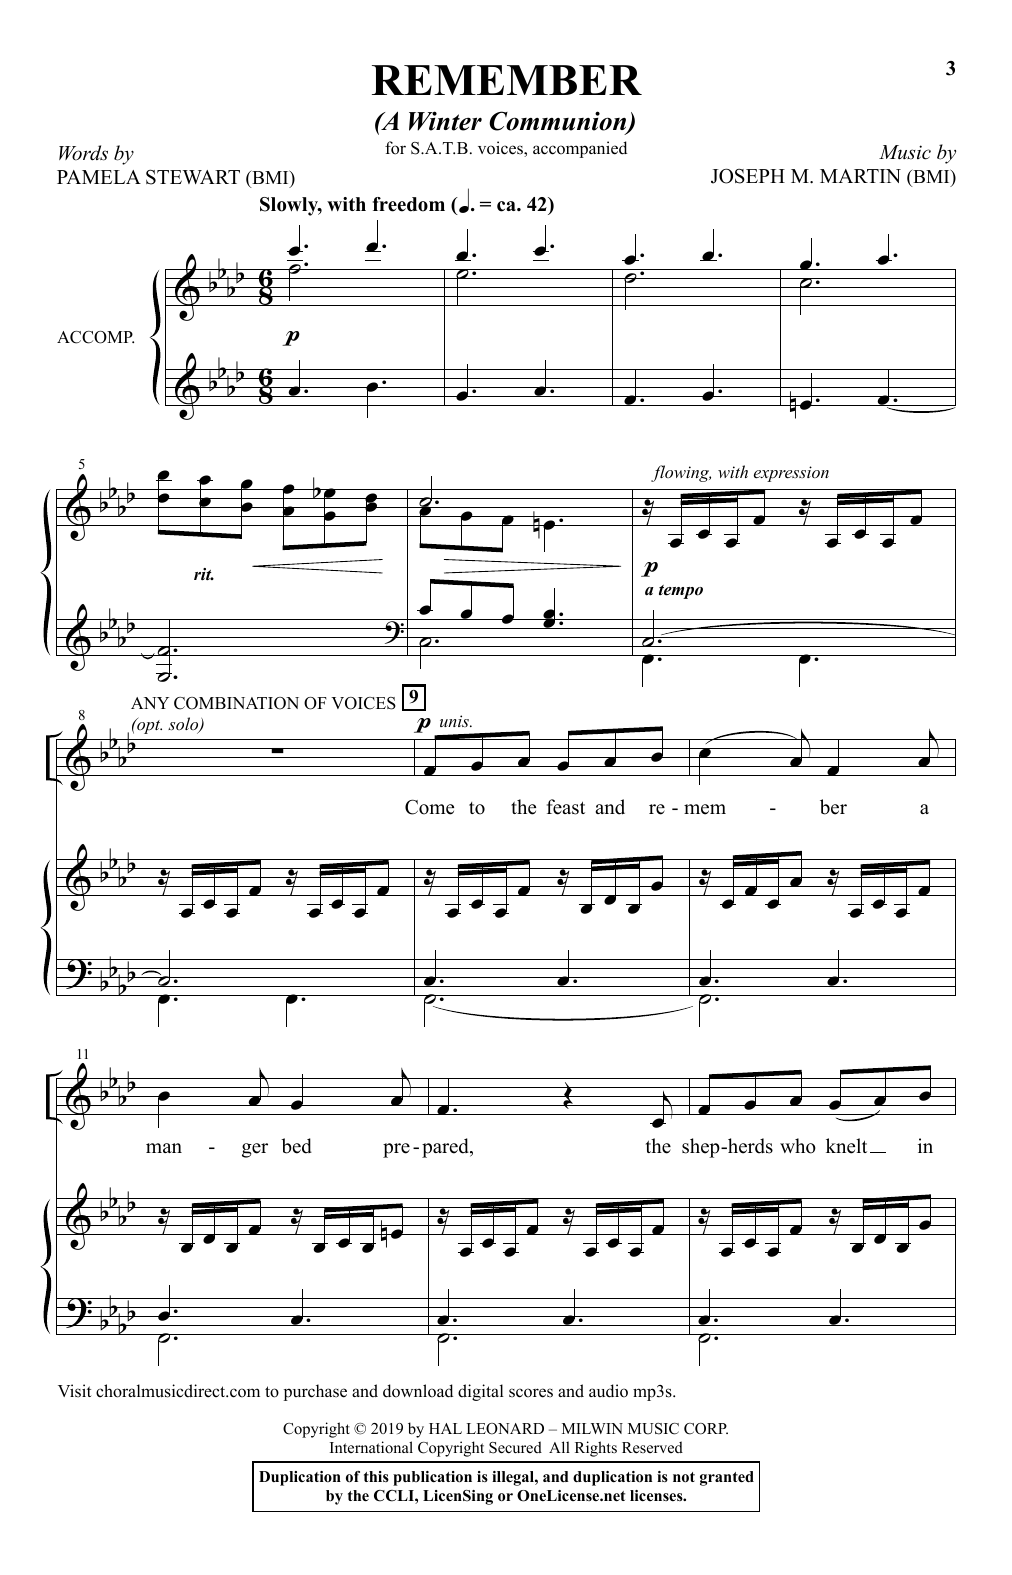 Pamela Stewart & Joseph Martin Remember (A Winter Communion) sheet music notes and chords arranged for SATB Choir